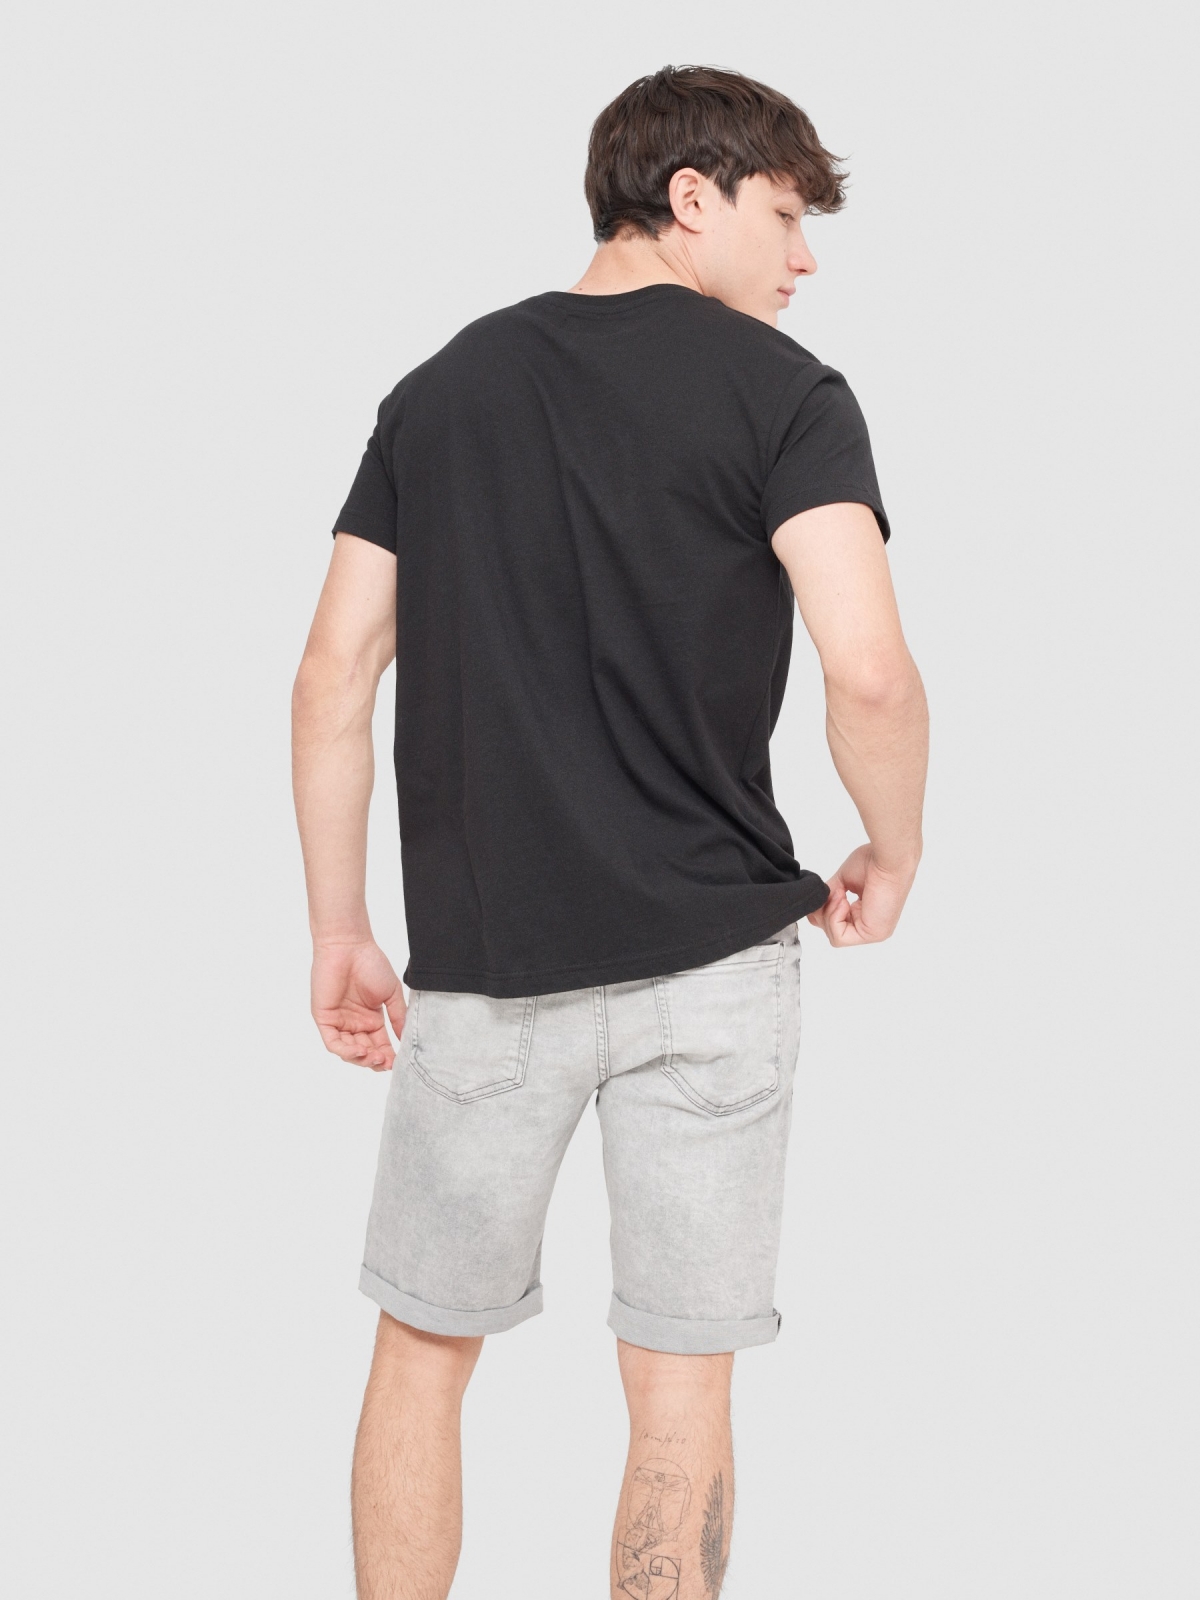 Grey skinny denim shorts grey middle back view